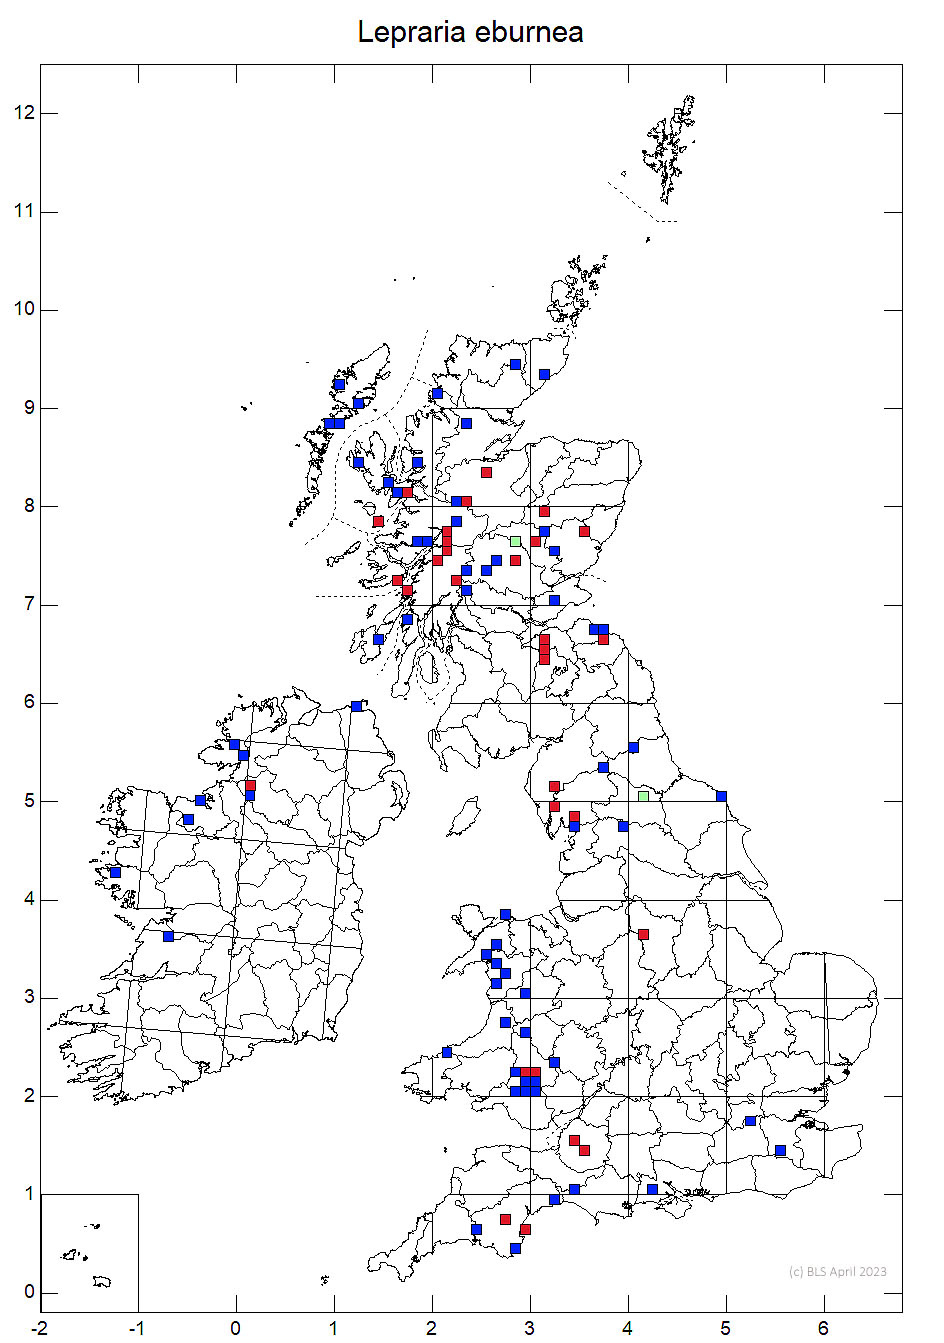 Lepraria eburnea 10km sq distribution map